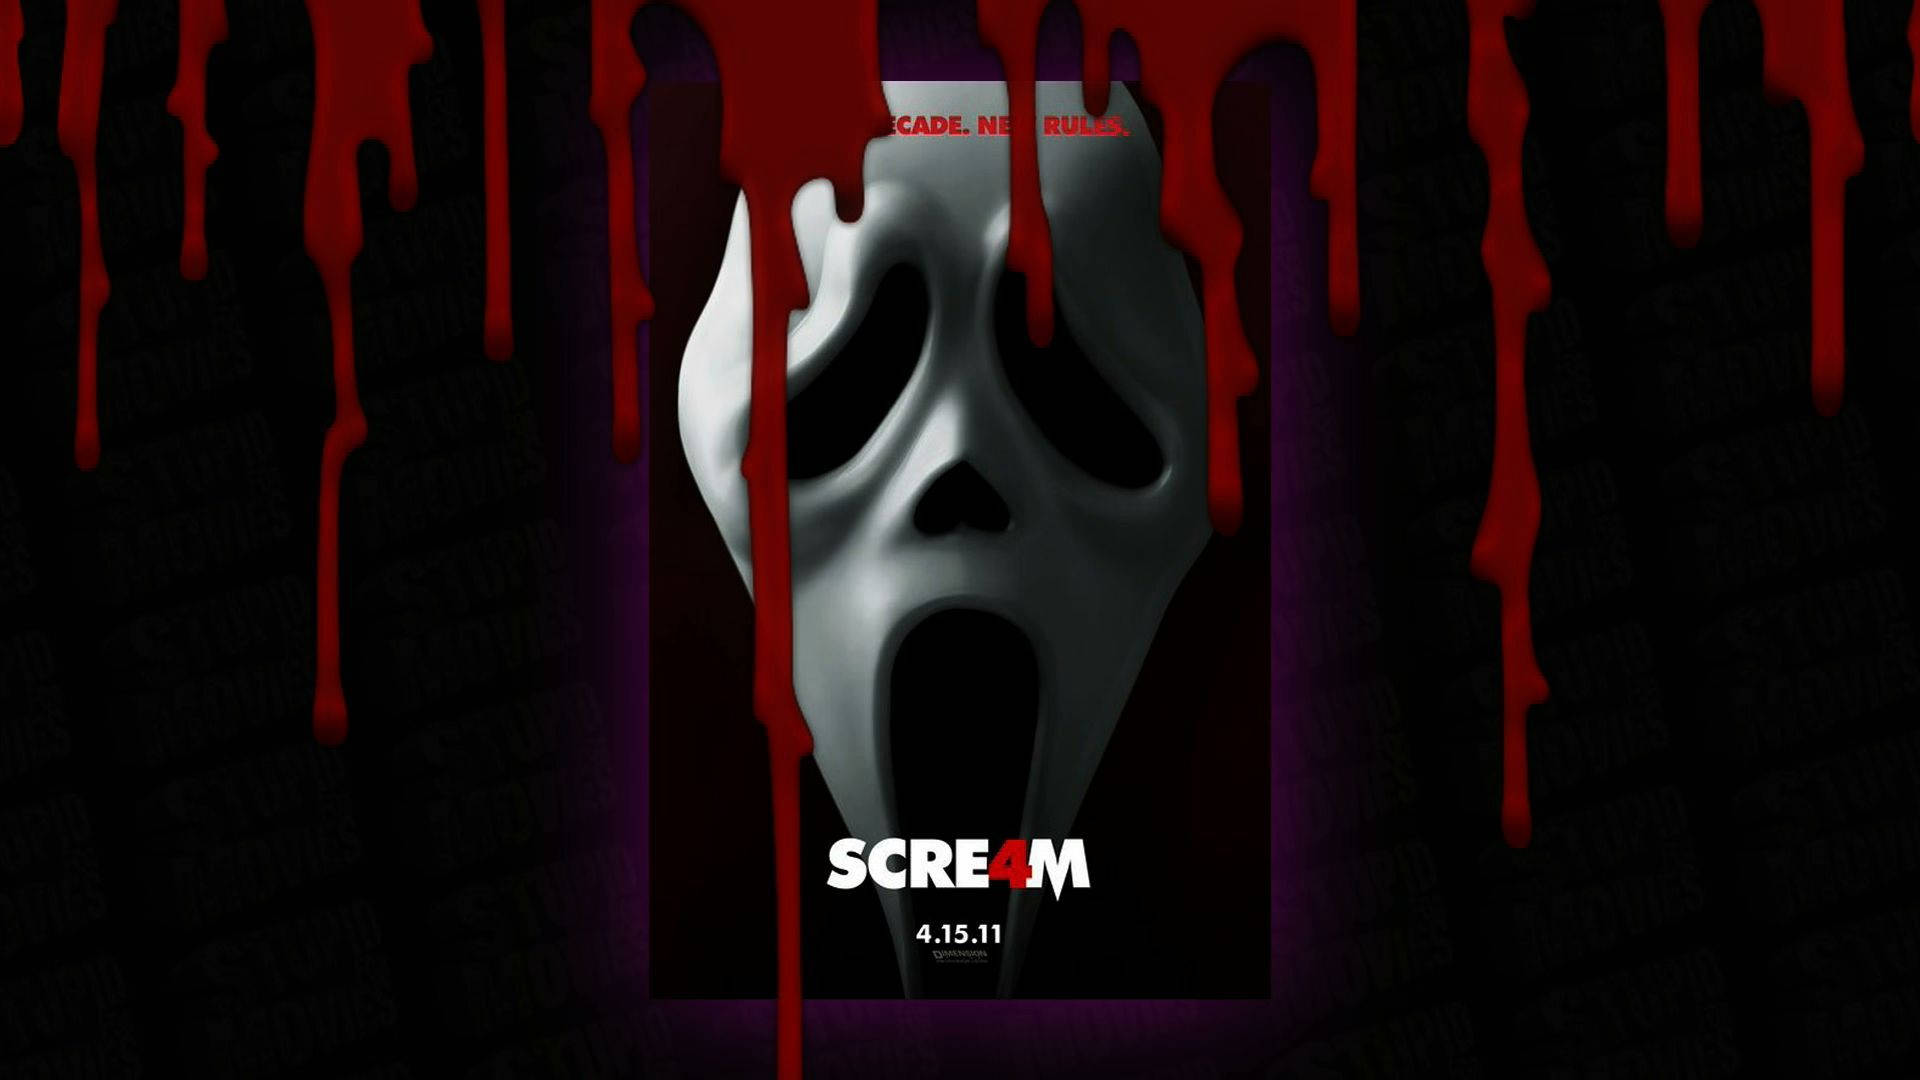 Scream Dripping Blood Poster Background